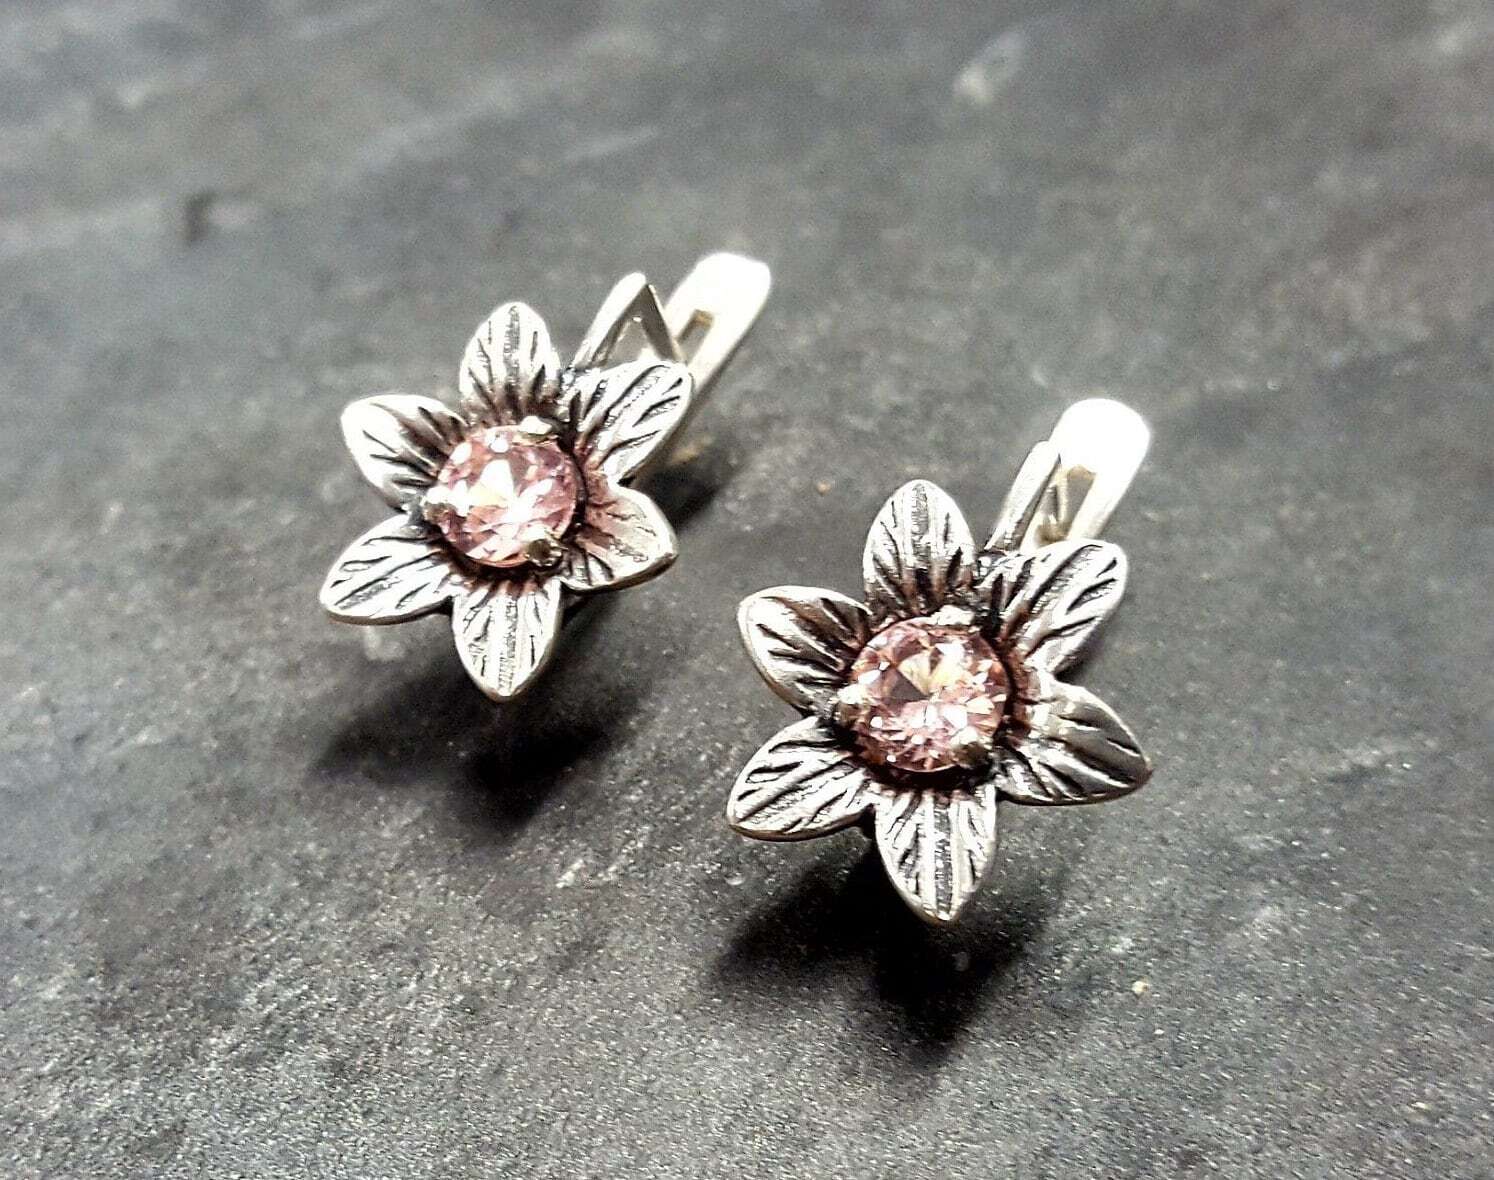 Morganite Earrings, Created Morganite, Pink Flower Earrings, Pink Vintage Earrings, Flower Studs, Silver Flower Studs, Silver Earrings